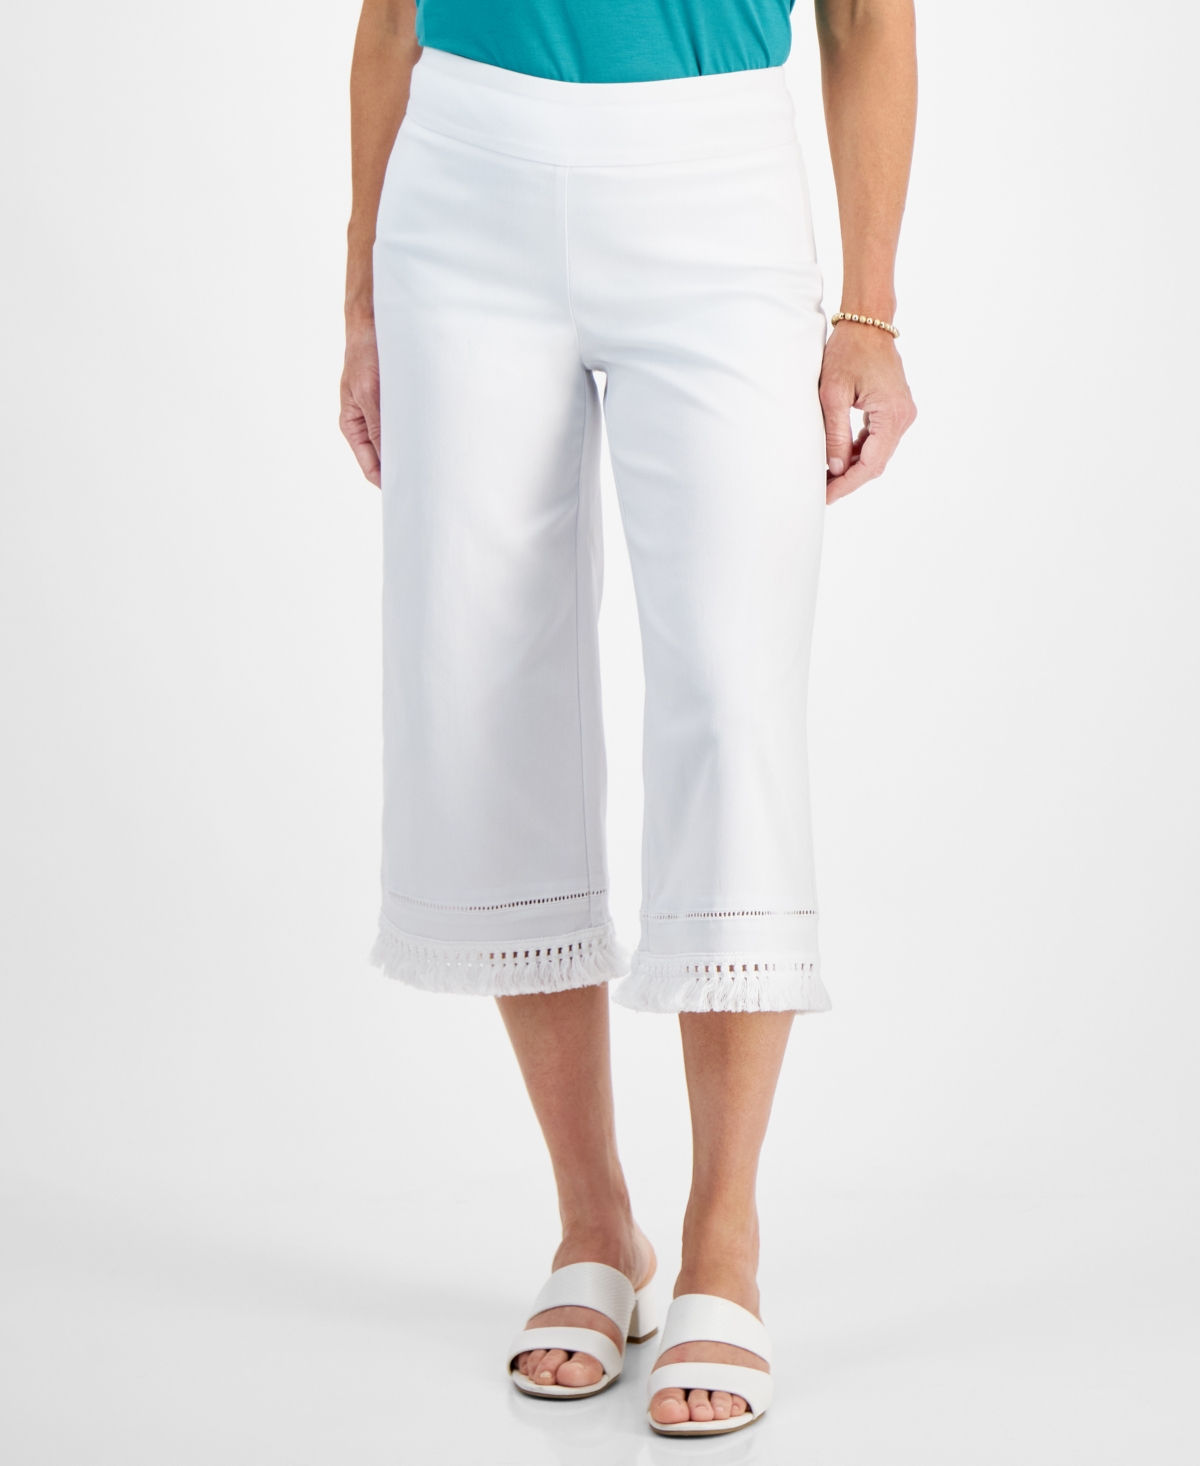 Petite Fringe-Trim Capri Pants, Created for Macy's - Bright White